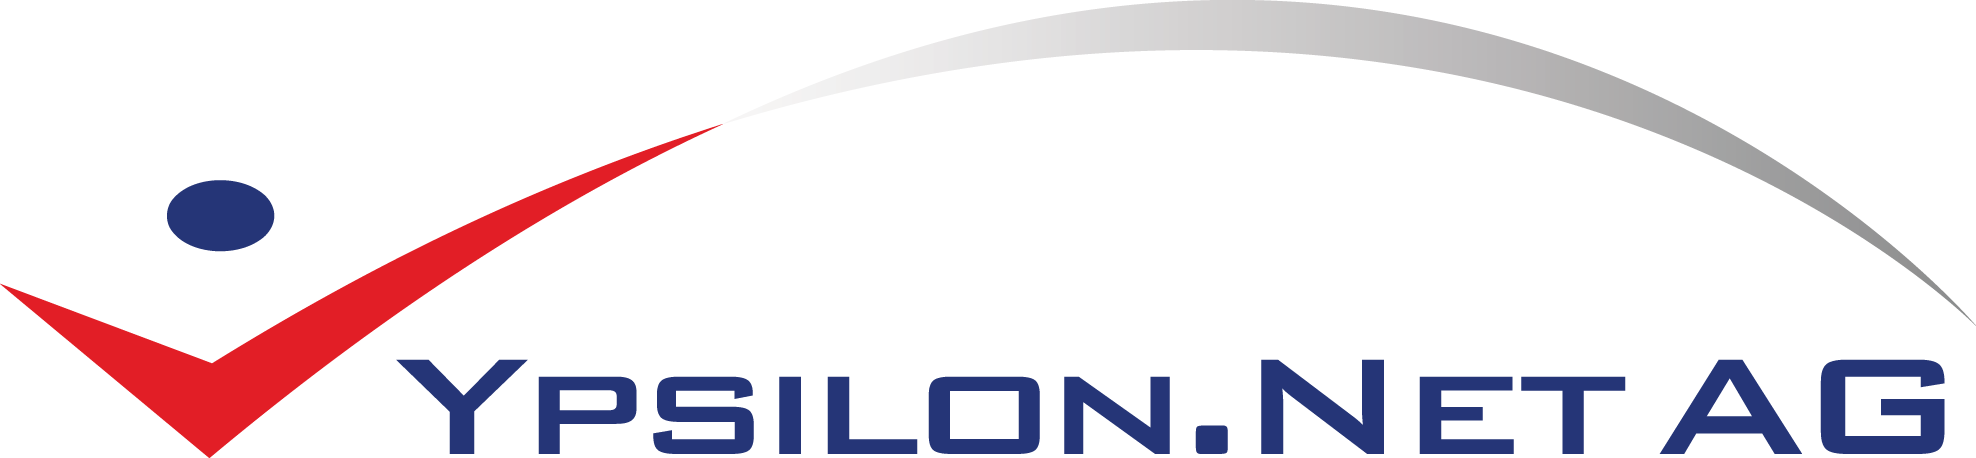 Ypsilon logo with link to their website